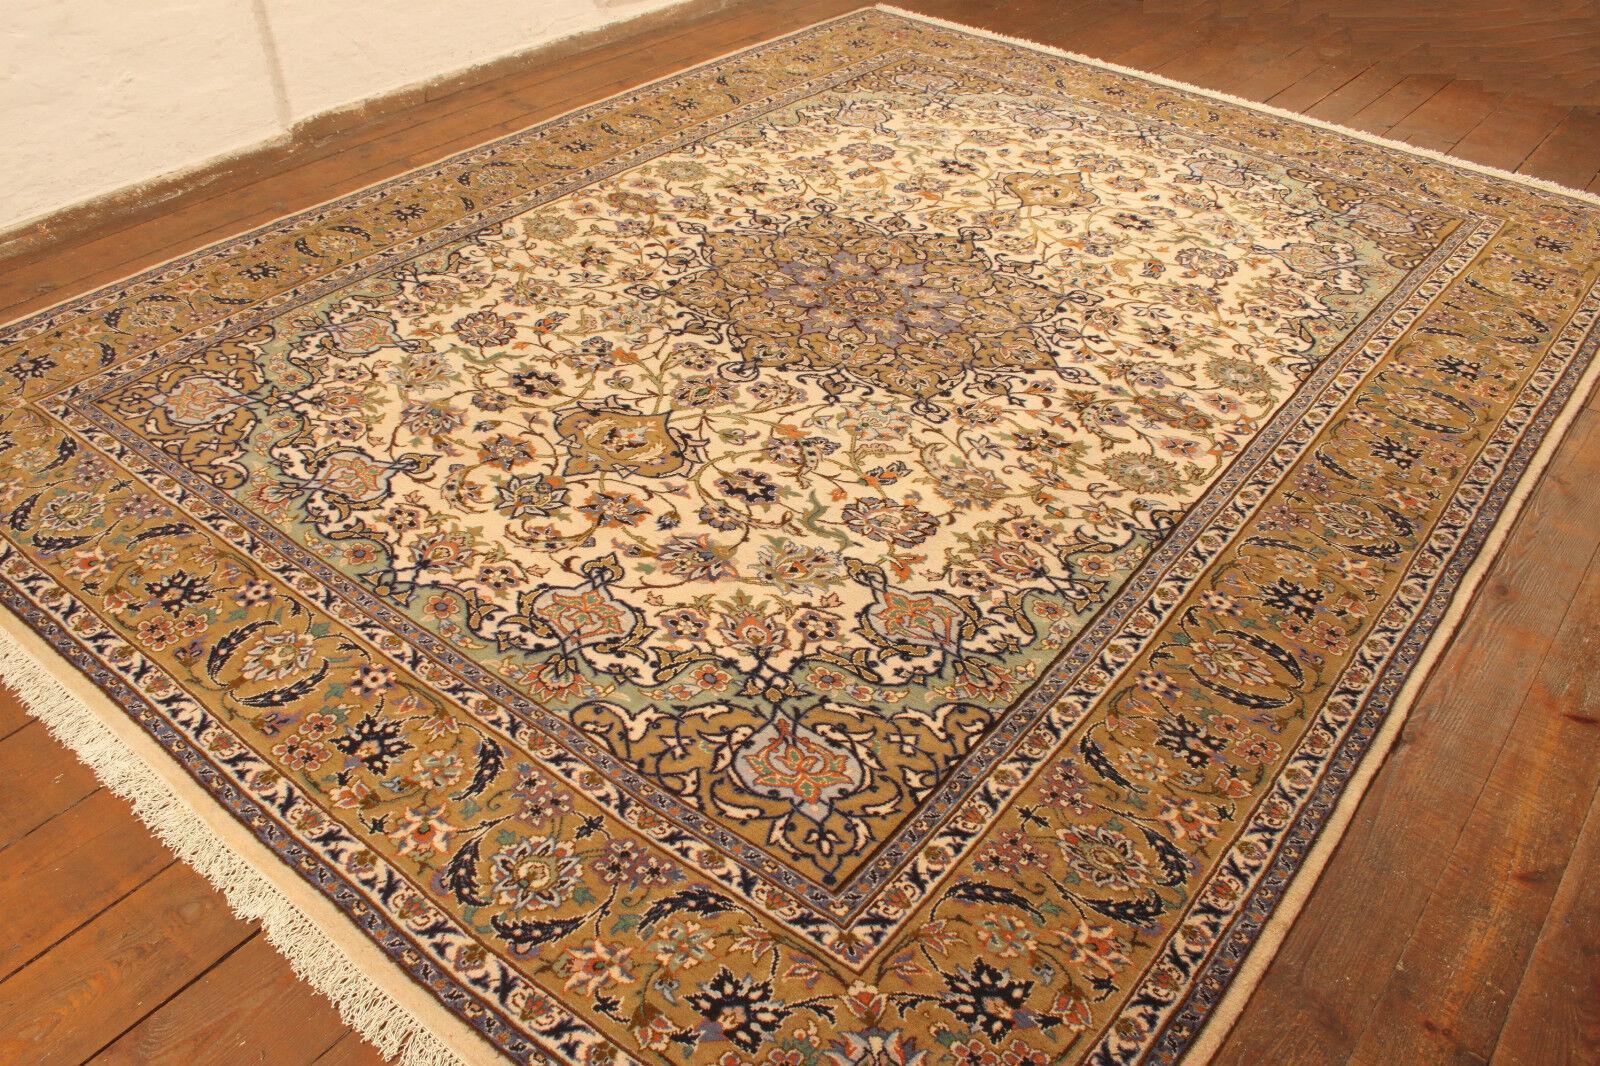 Handmade Contemporary Isfahan Rug 9.6' x 12.7' (295cm x 390cm), 2000s - 1T02 For Sale 5